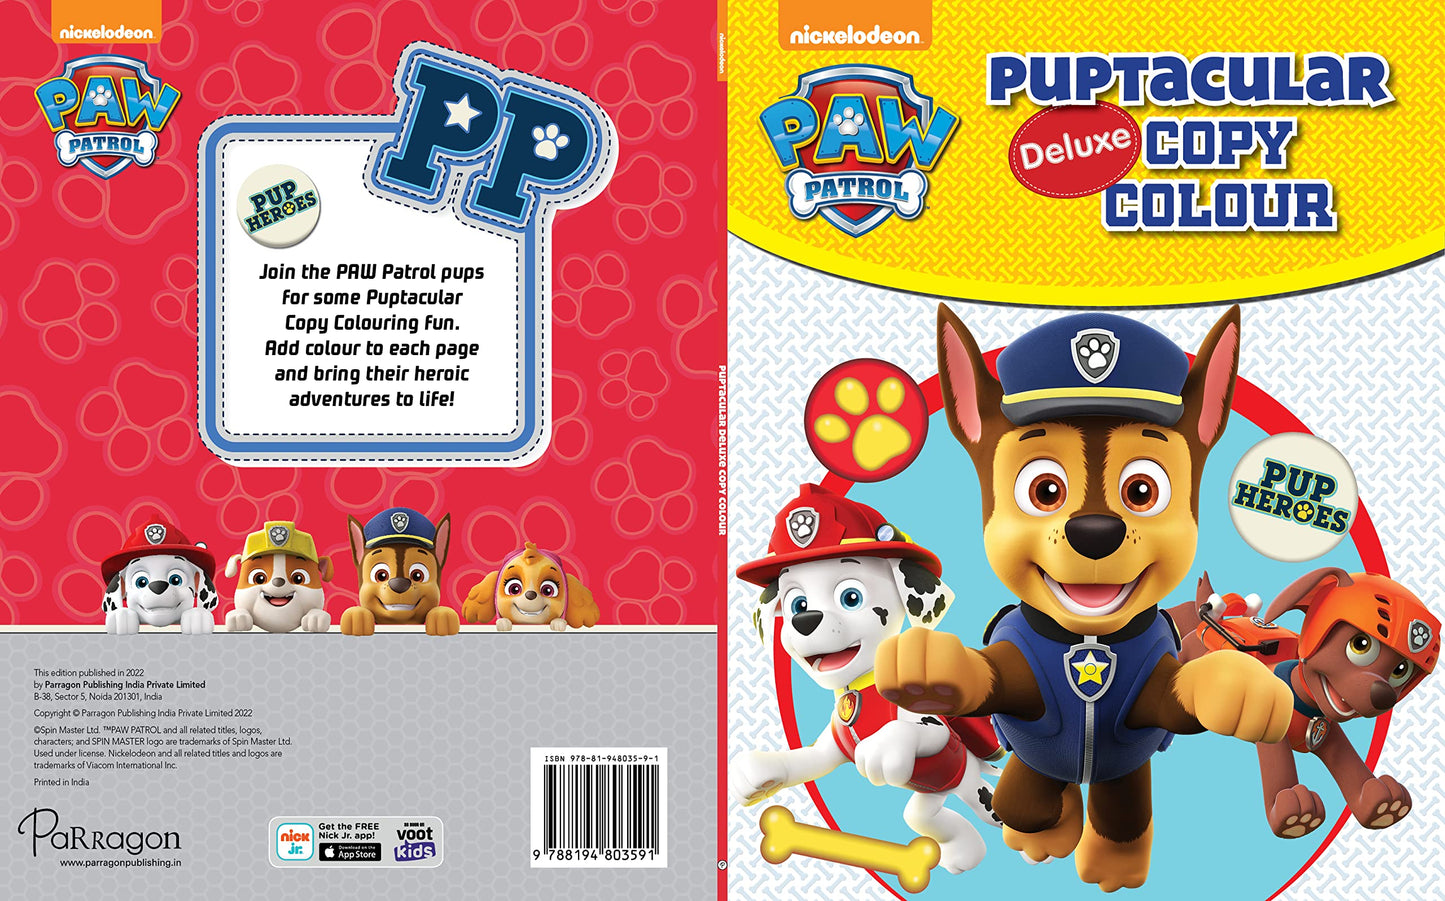 Paw Patrol Puptacular Copy Colour Parragon Publishing India